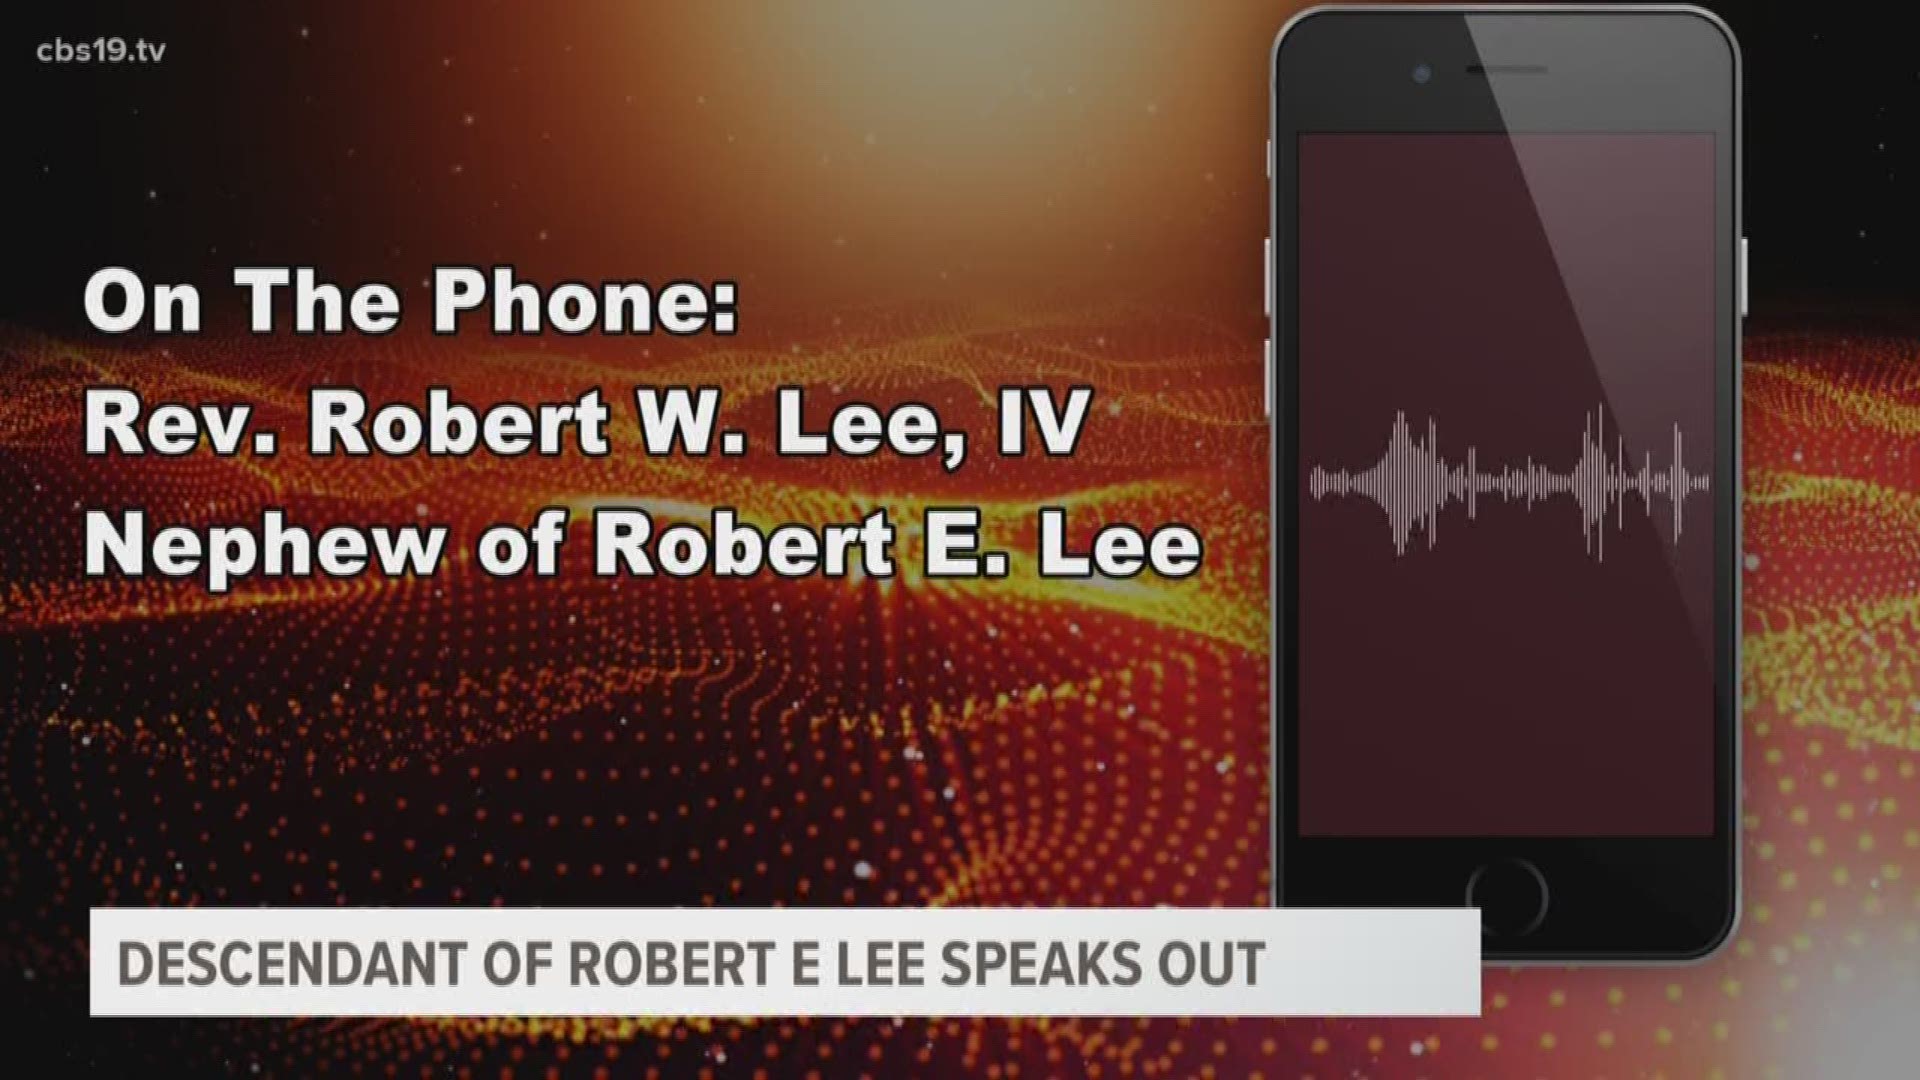 Relative of Robert E. Lee speaks before Monday's meeting 